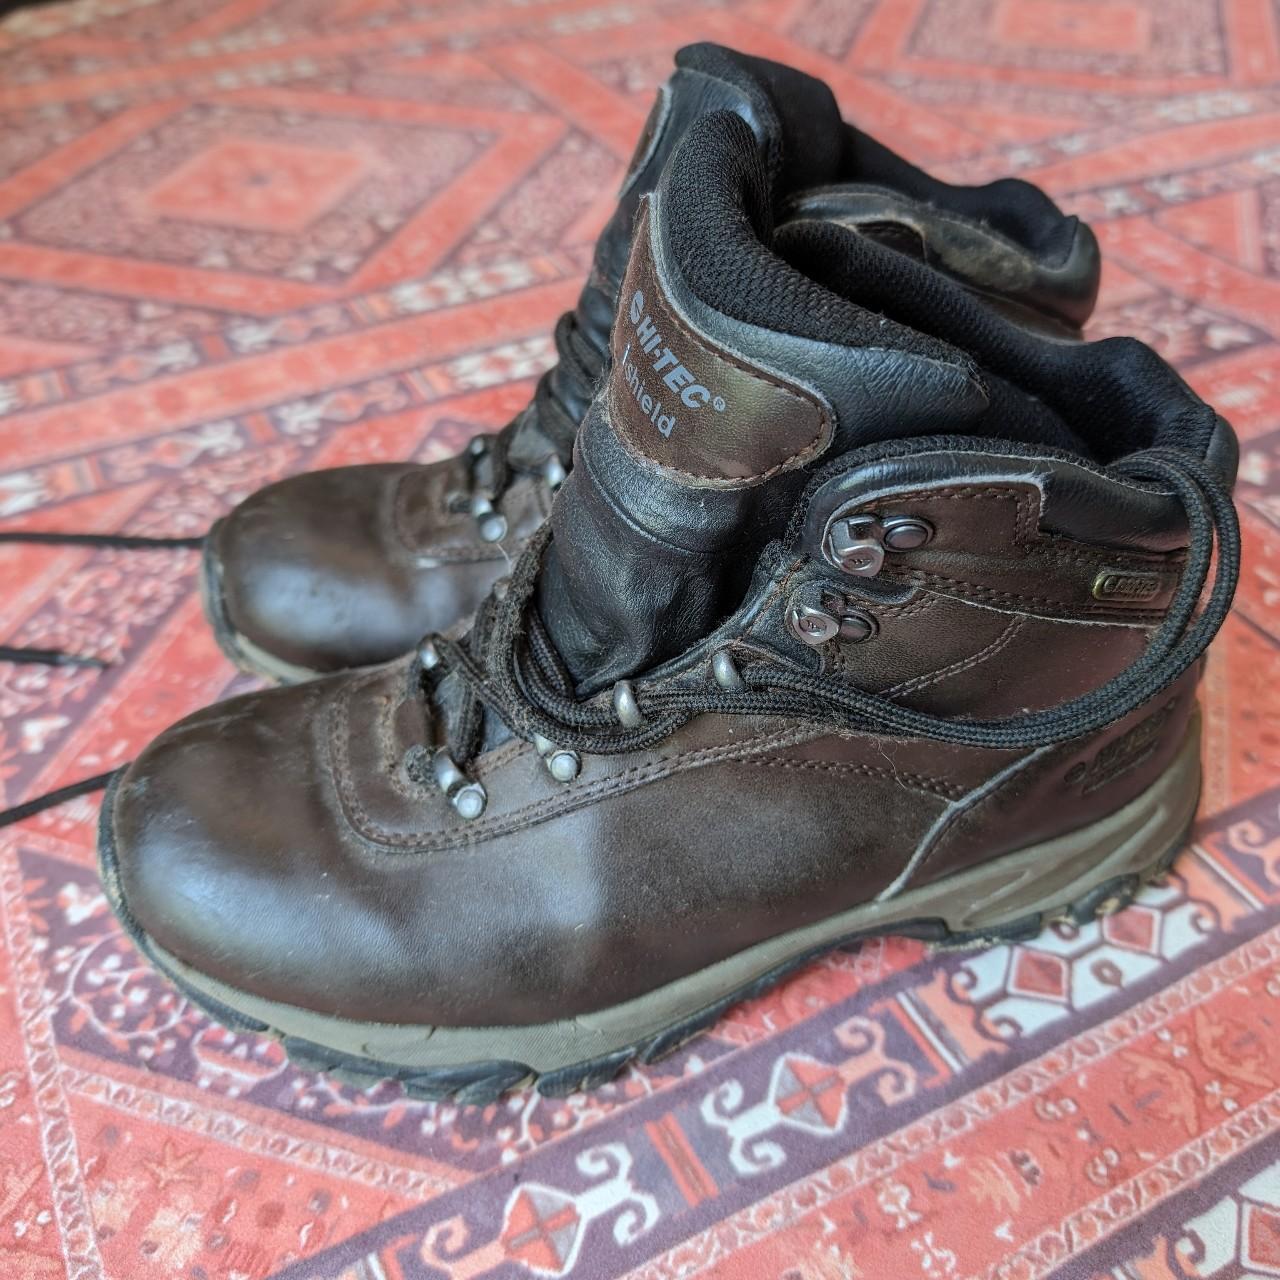 HI-TEC leather hiking boots - lace up size US 7.5.... - Depop